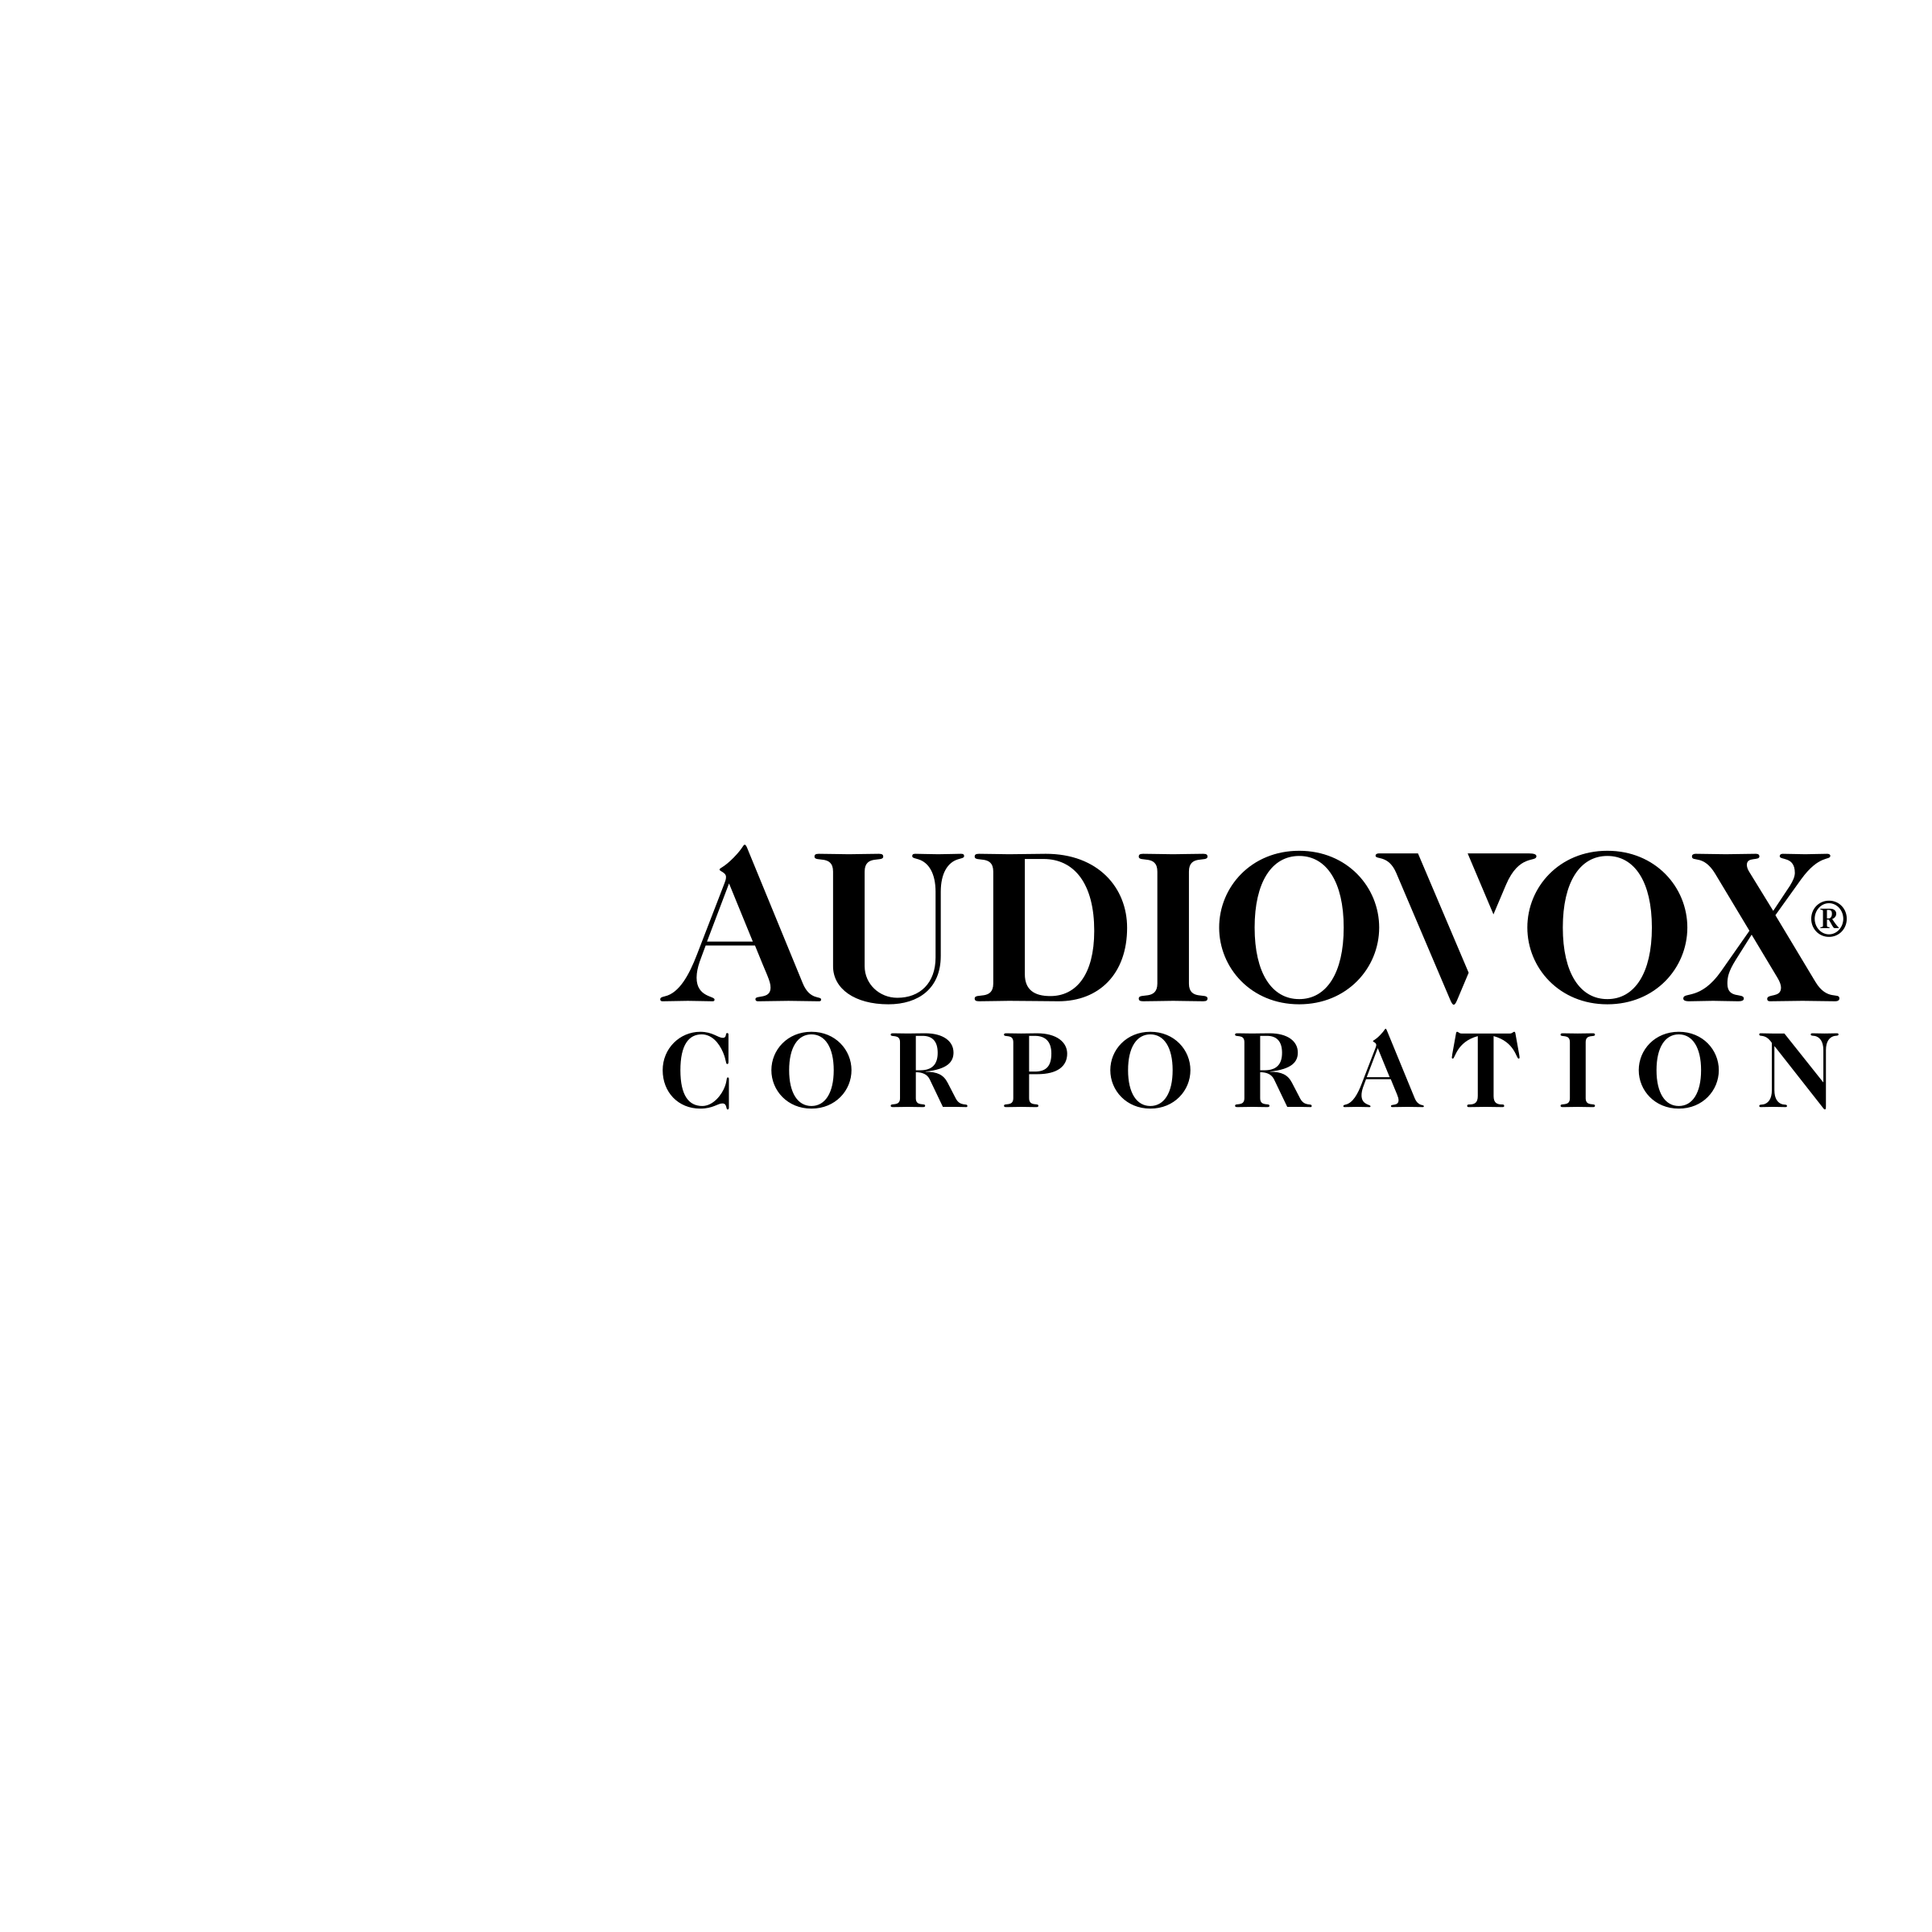 Audiovox Logo - Audiovox 02 Logo PNG Transparent & SVG Vector - Freebie Supply